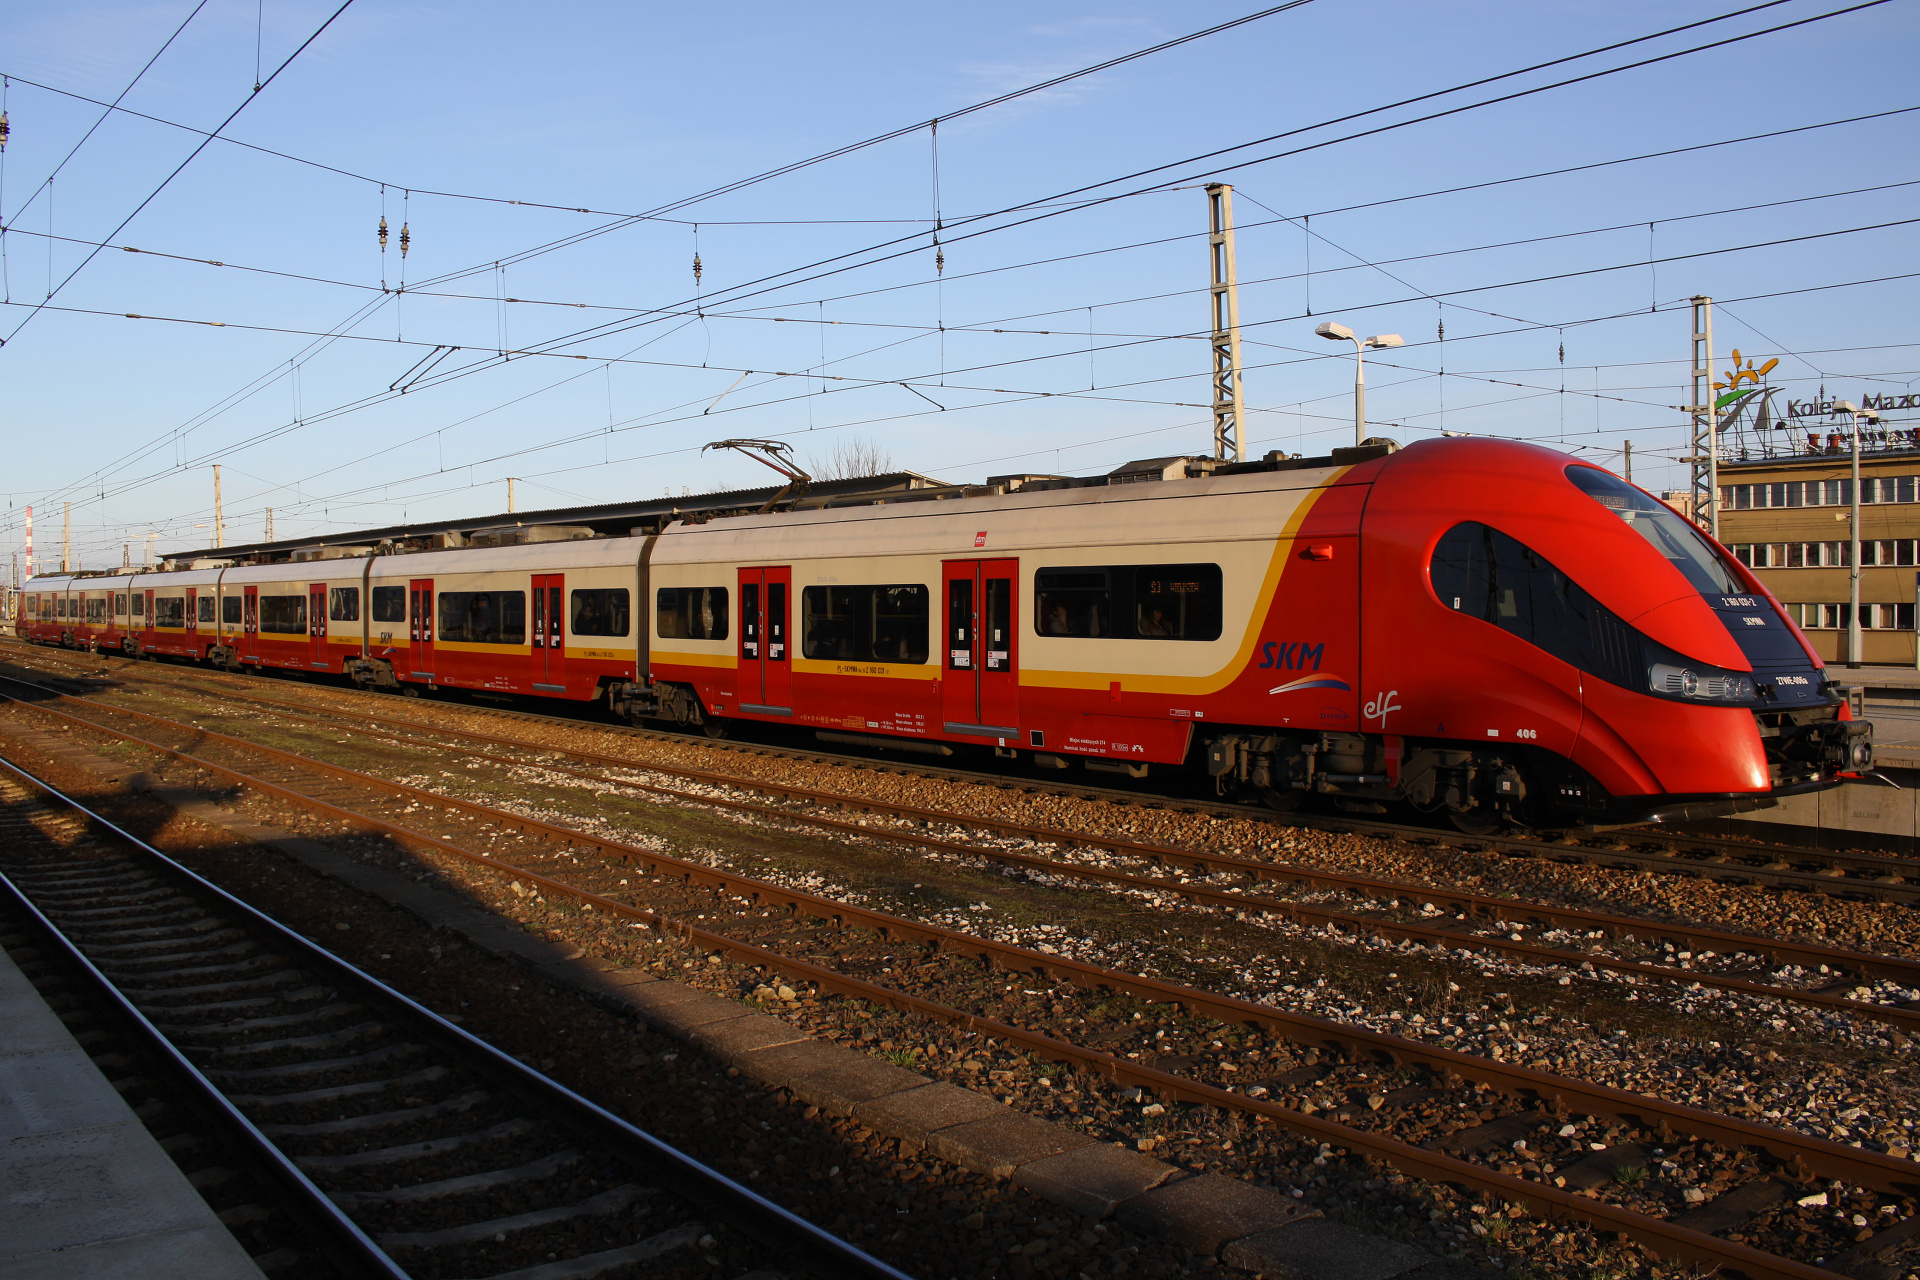 27WE-006 (Vehicles » Trains and Locomotives » Pesa ELF)